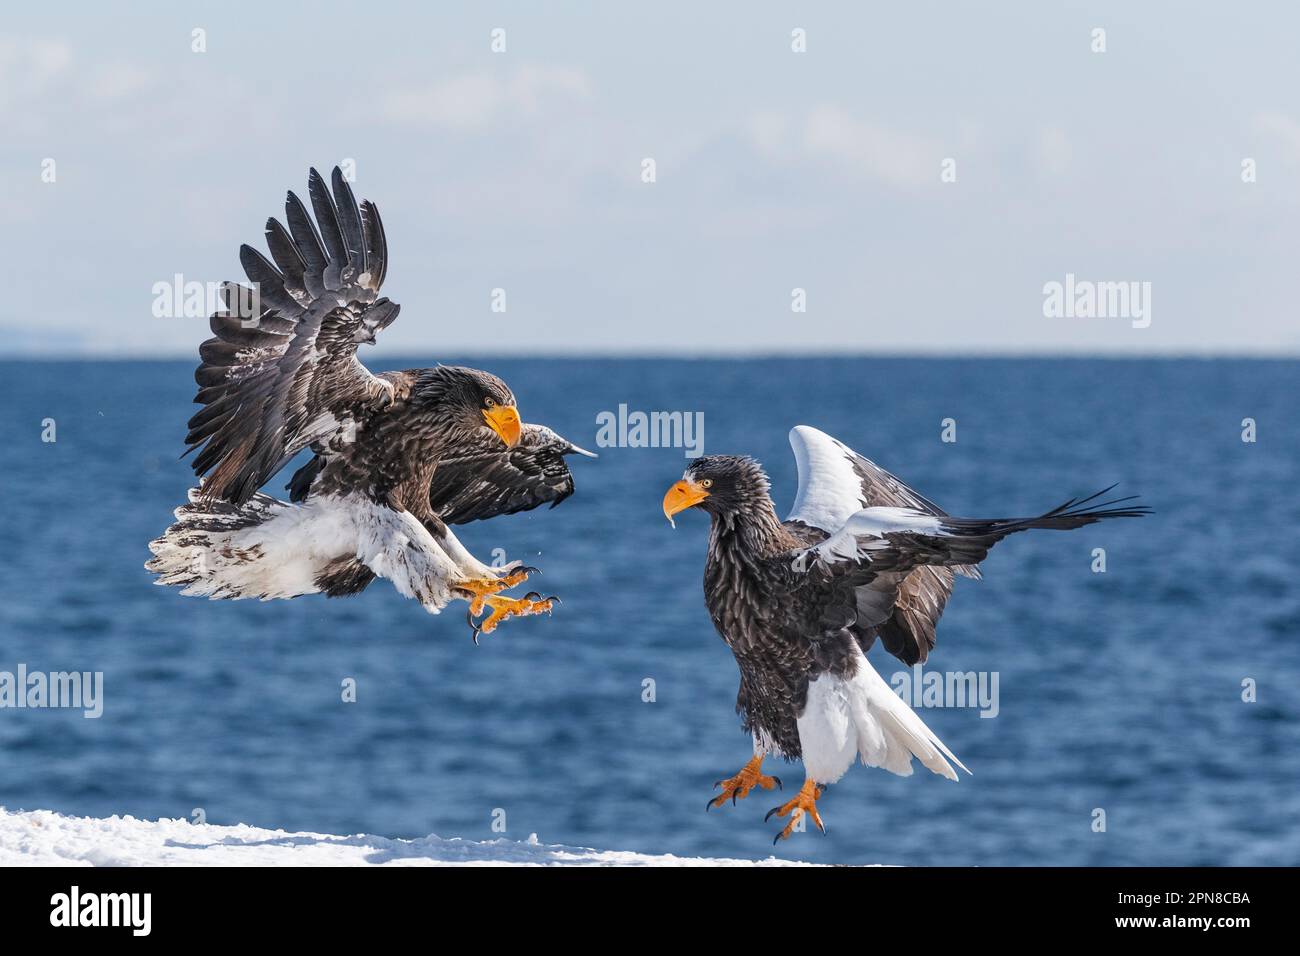 Steller's Sea Eagle (Haliaeetus pelagicus) in flight with its wings spread fighting with another sea eagle. Rausu, Menashi, Hokkaido, Japan. Stock Photo